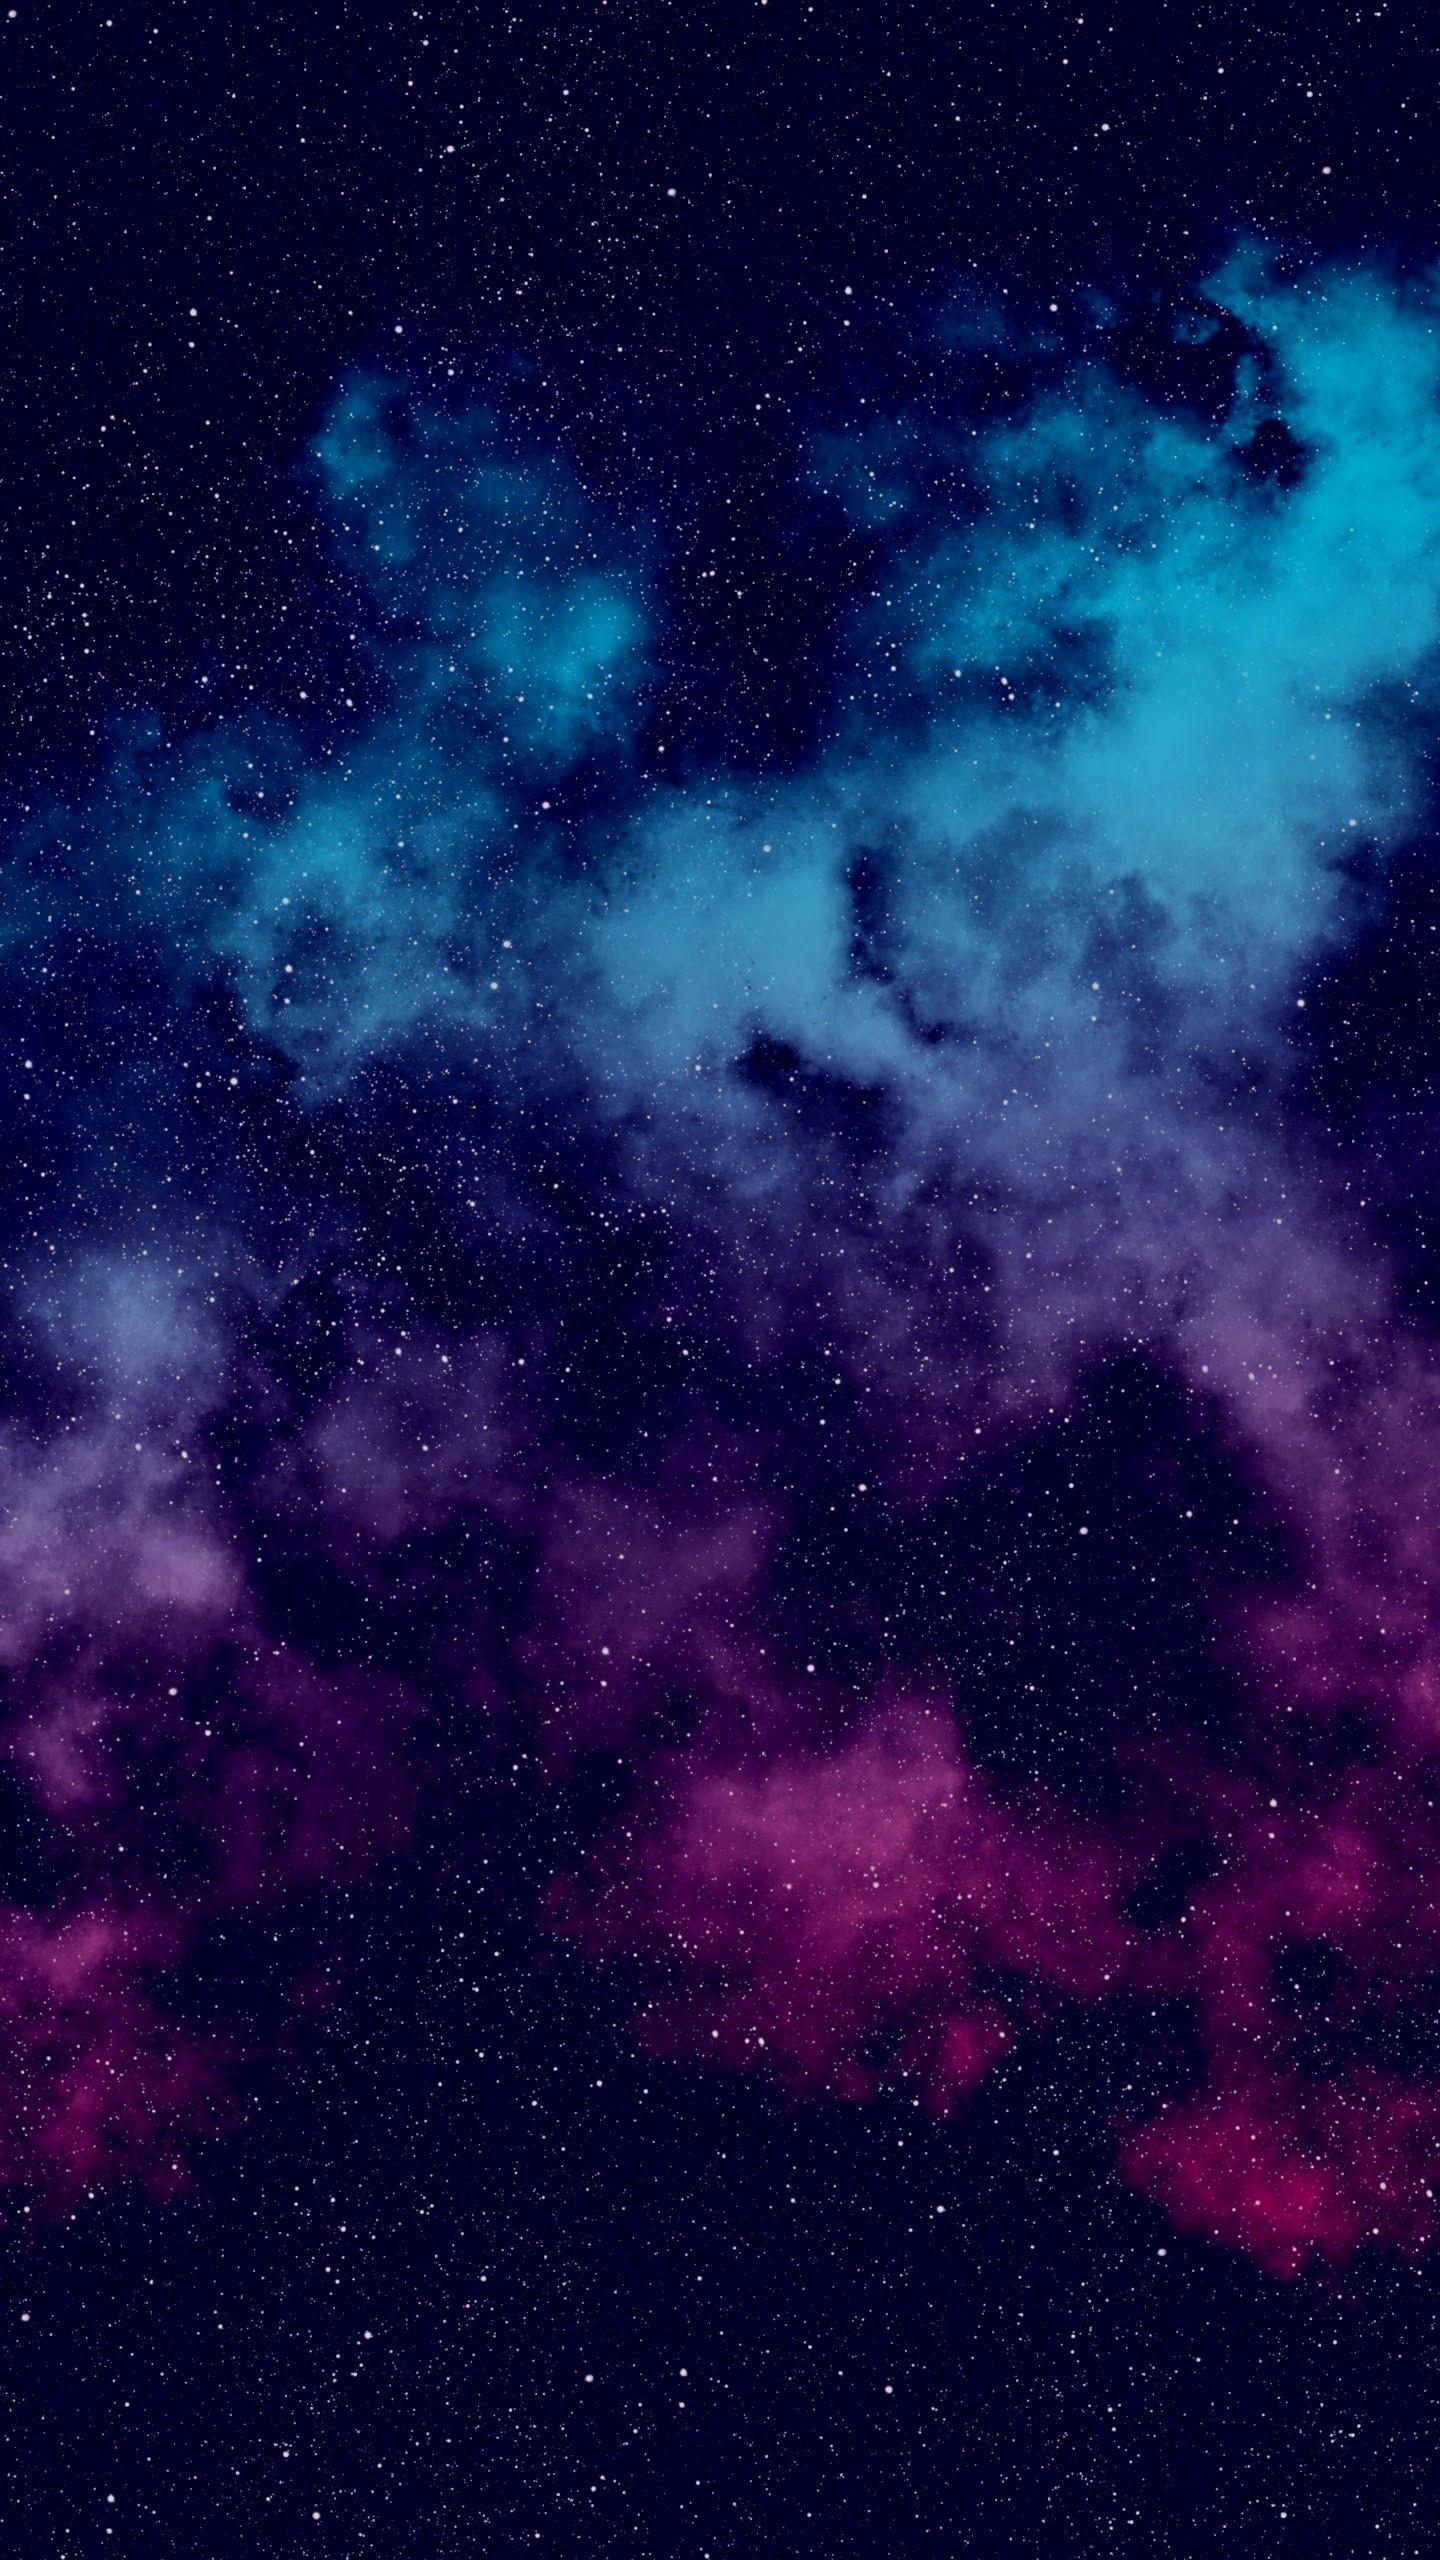 Astronomy iPhone wallpaper aesthetic celestial  Premium Vector  rawpixel